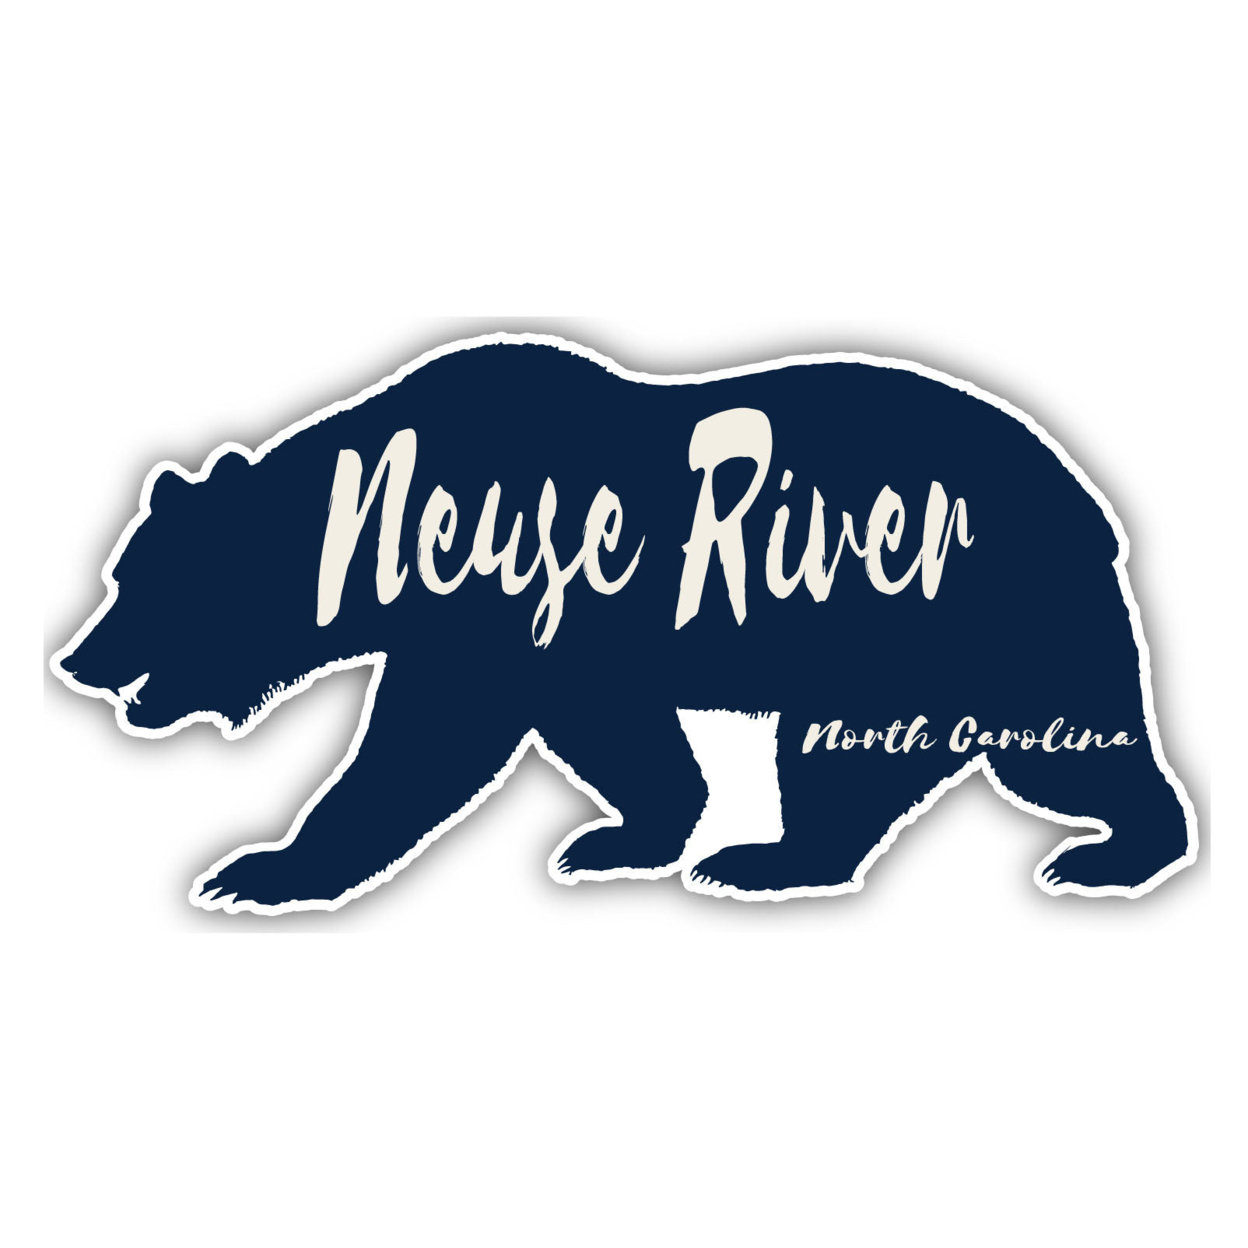 Neuse River North Carolina Souvenir Decorative Stickers (Choose Theme And Size) - Single Unit, 4-Inch, Bear